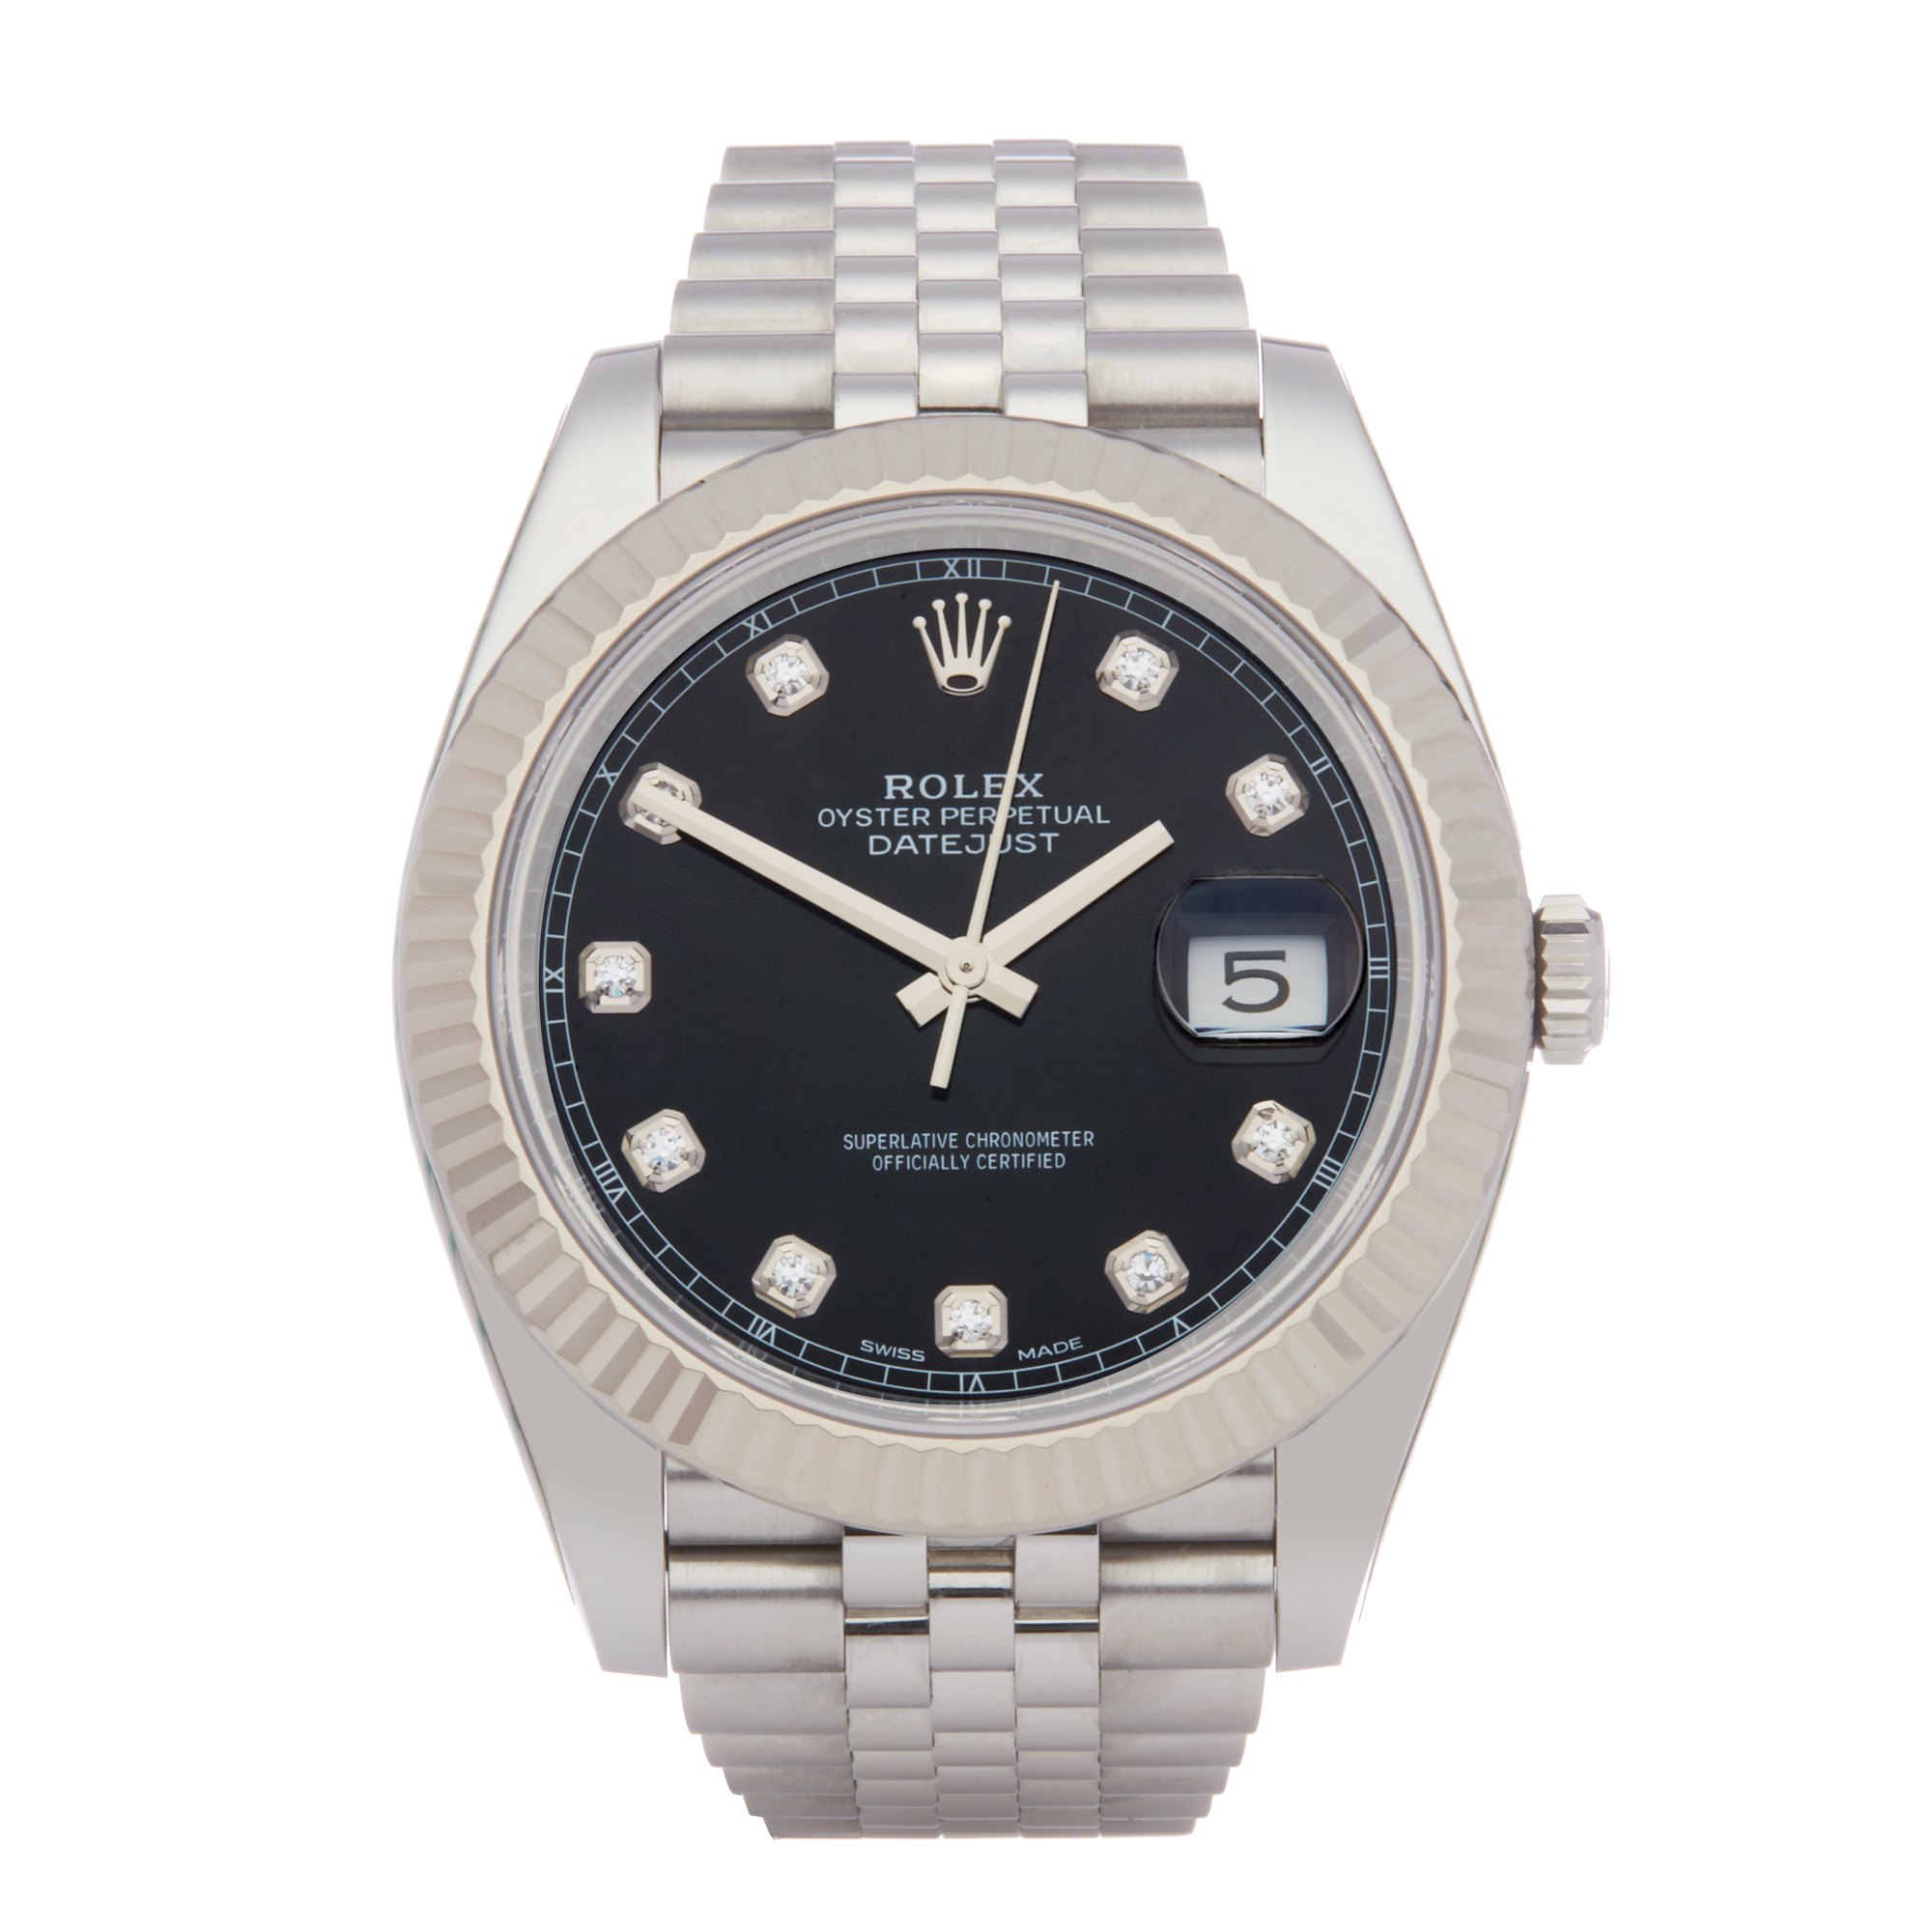 Rolex Datejust 41 Diamond Stainless Steel Watch 126334